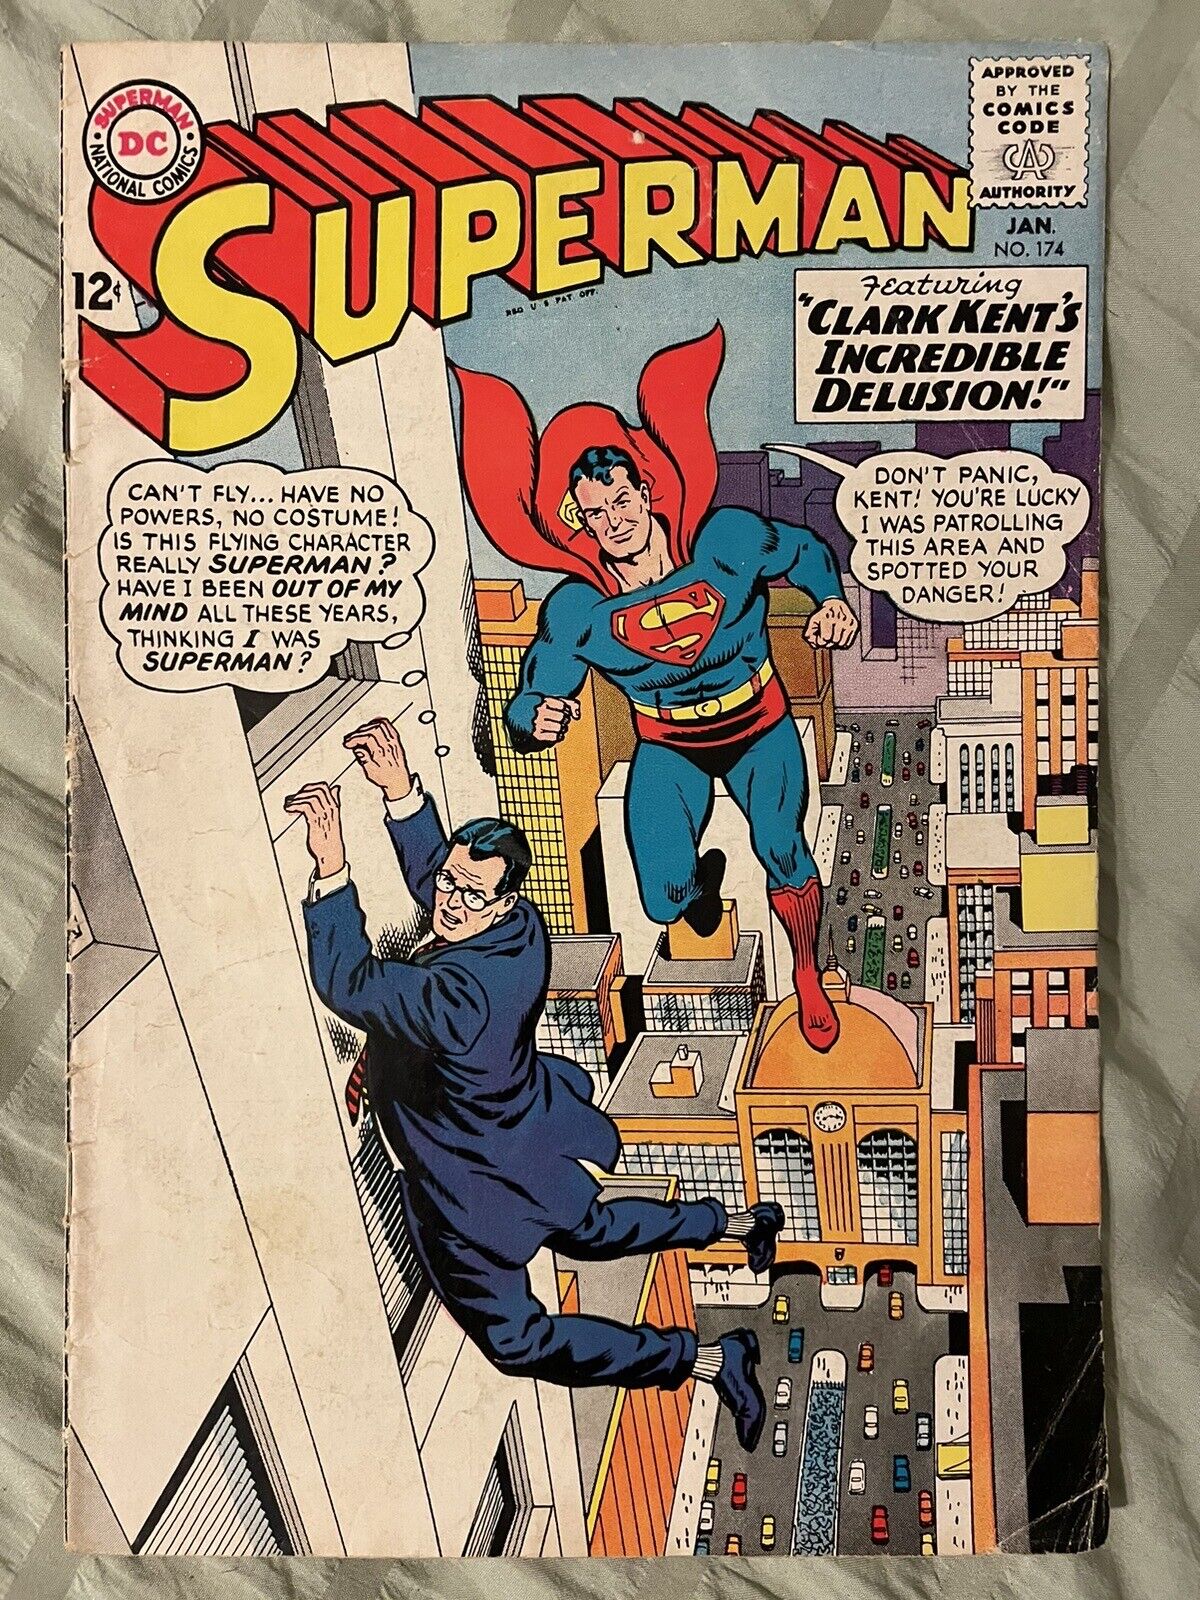 Superman #174 (DC, 1964)